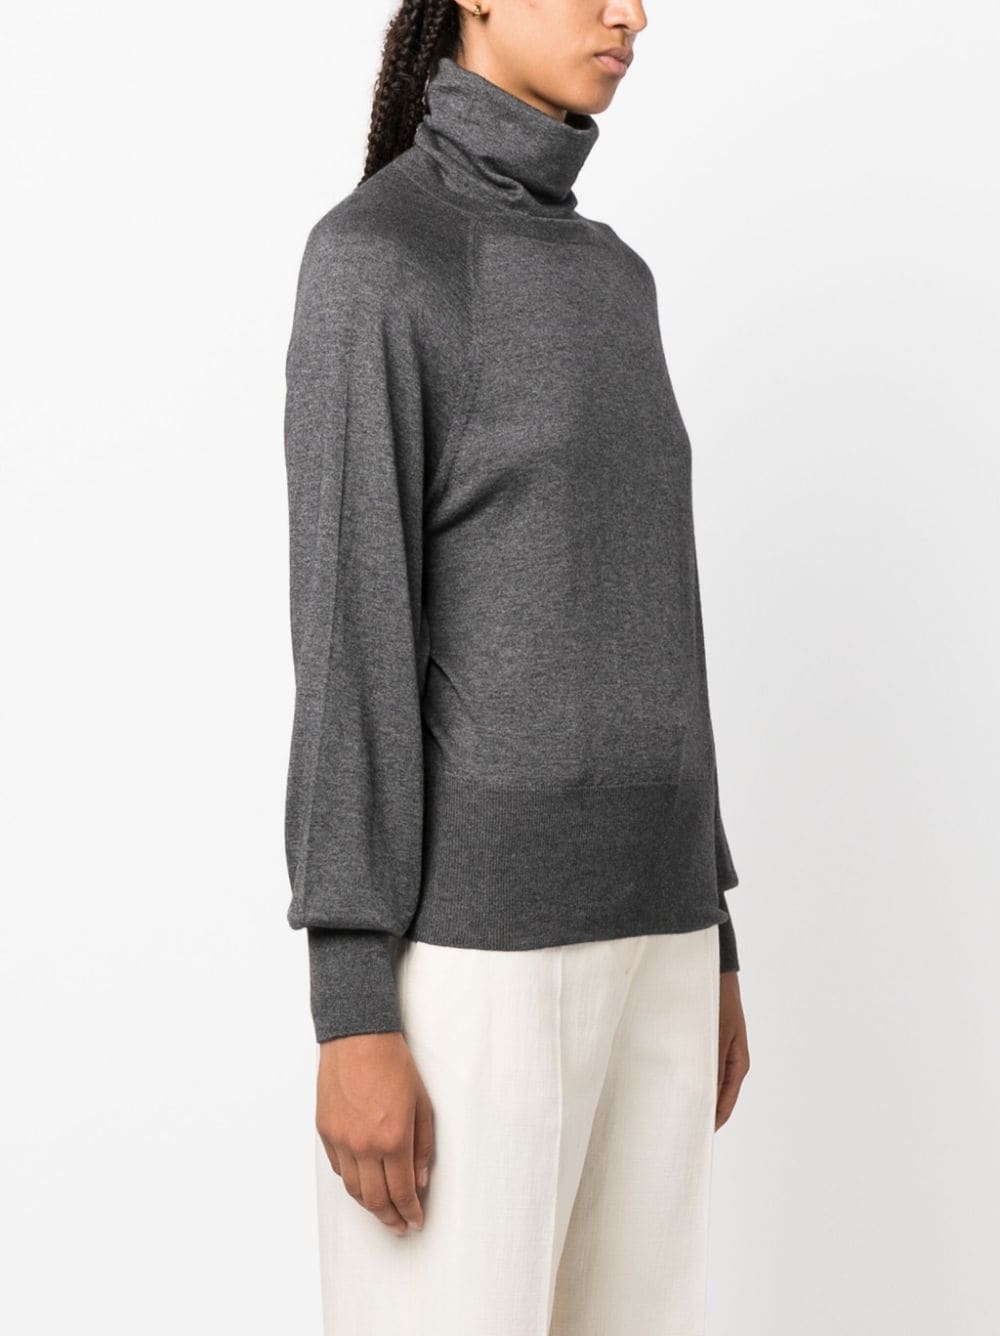 WILD CASHMERE Elegant Grey Cashmere and Silk Turtleneck Sweater